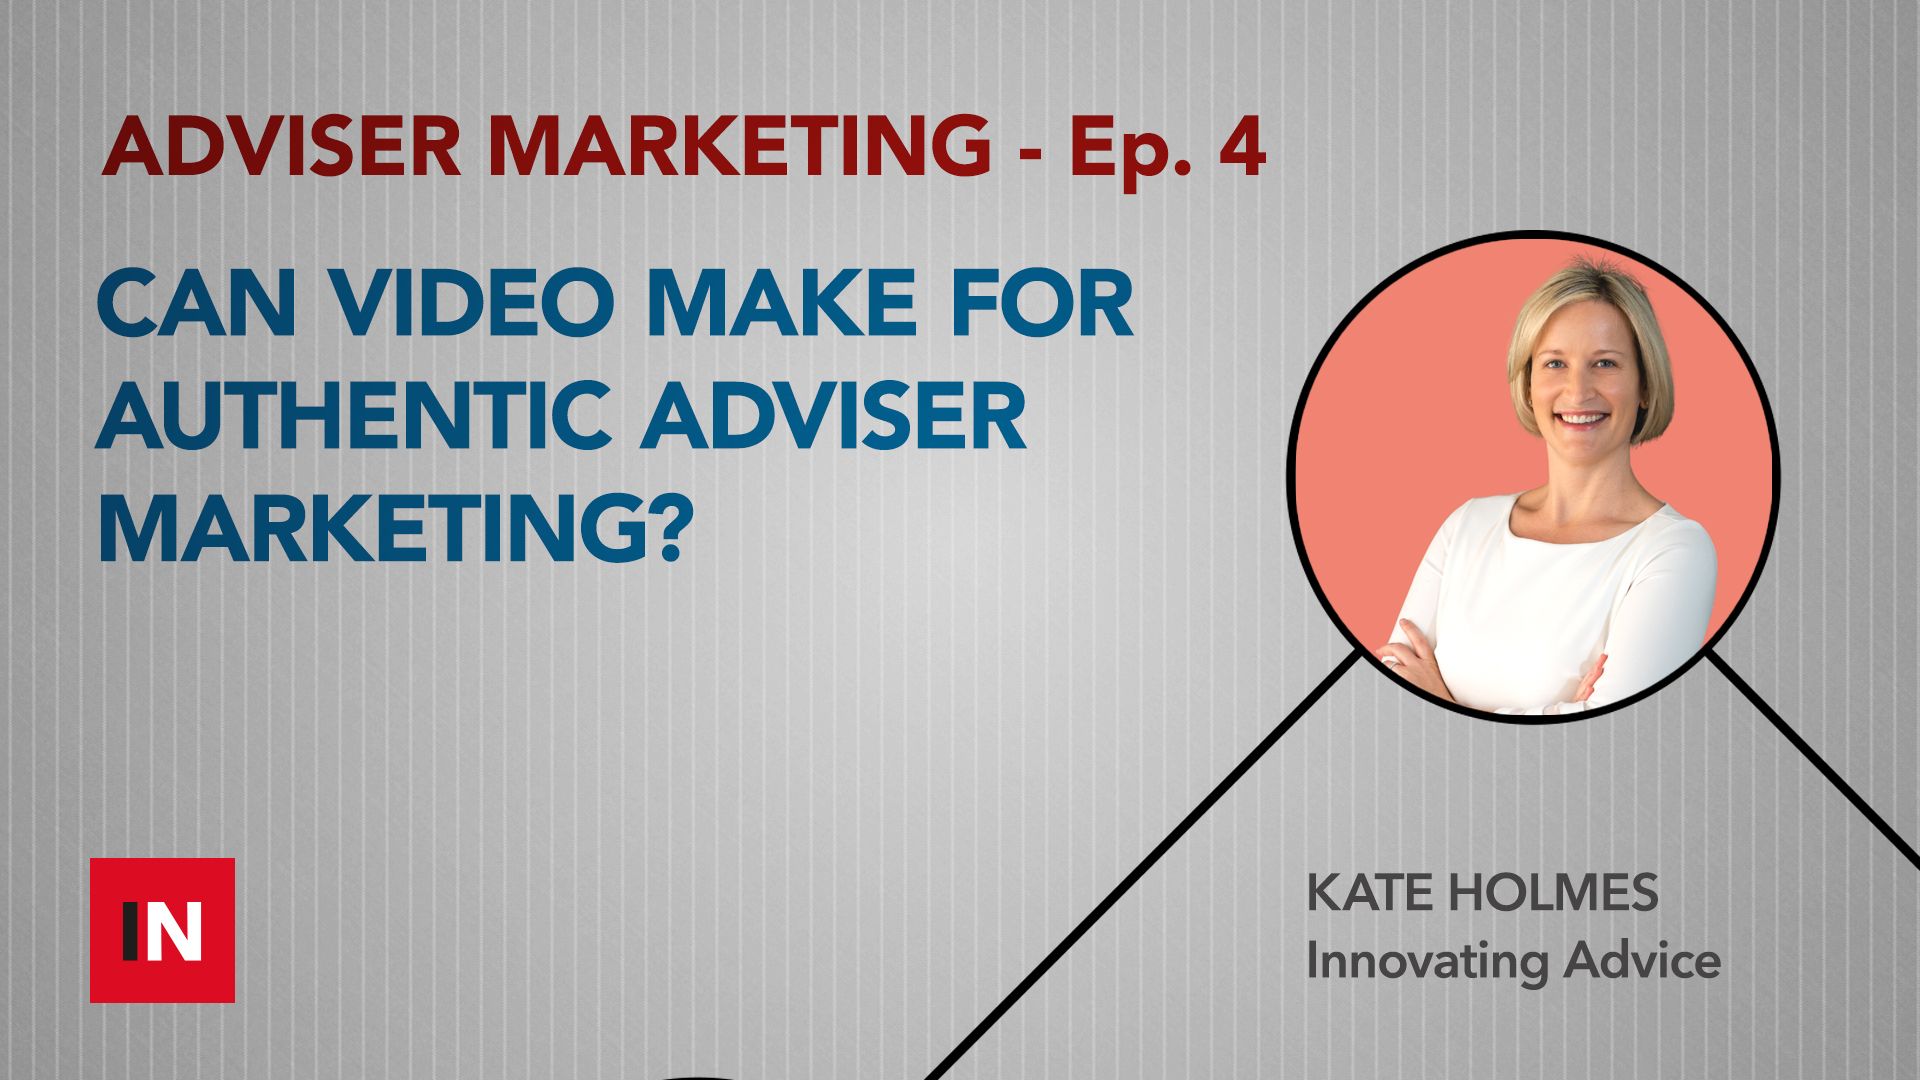 Leveraging video for authentic adviser marketing